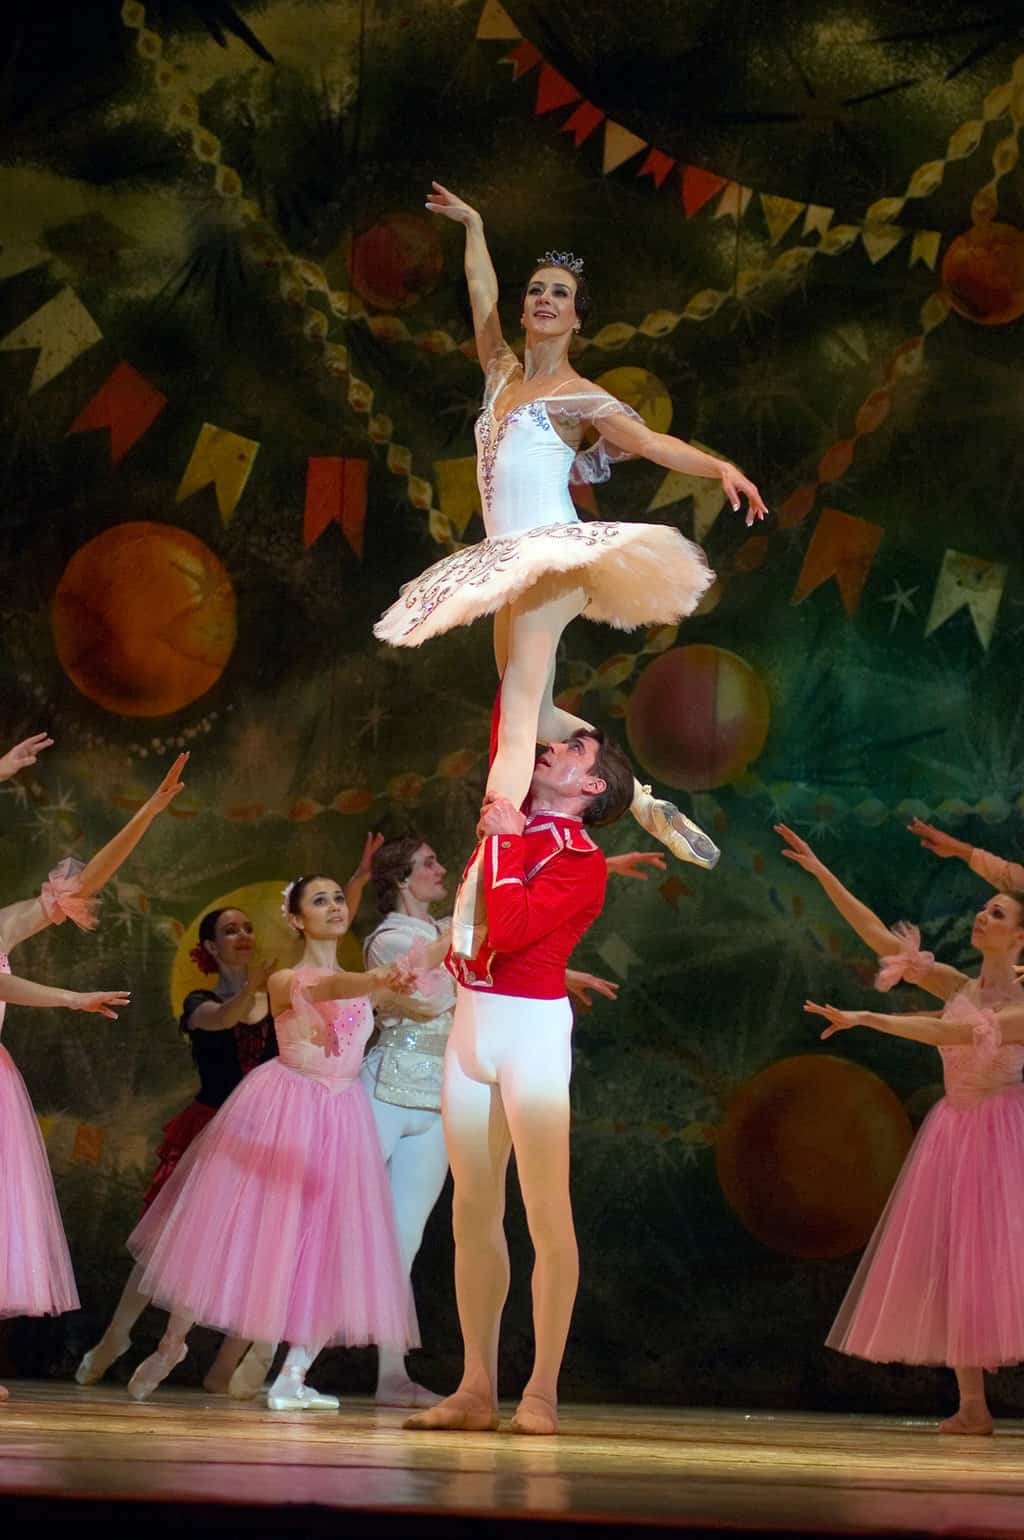 Nutcracker ballet characters- the nutcracker lifting the Sugar Plum Fairy